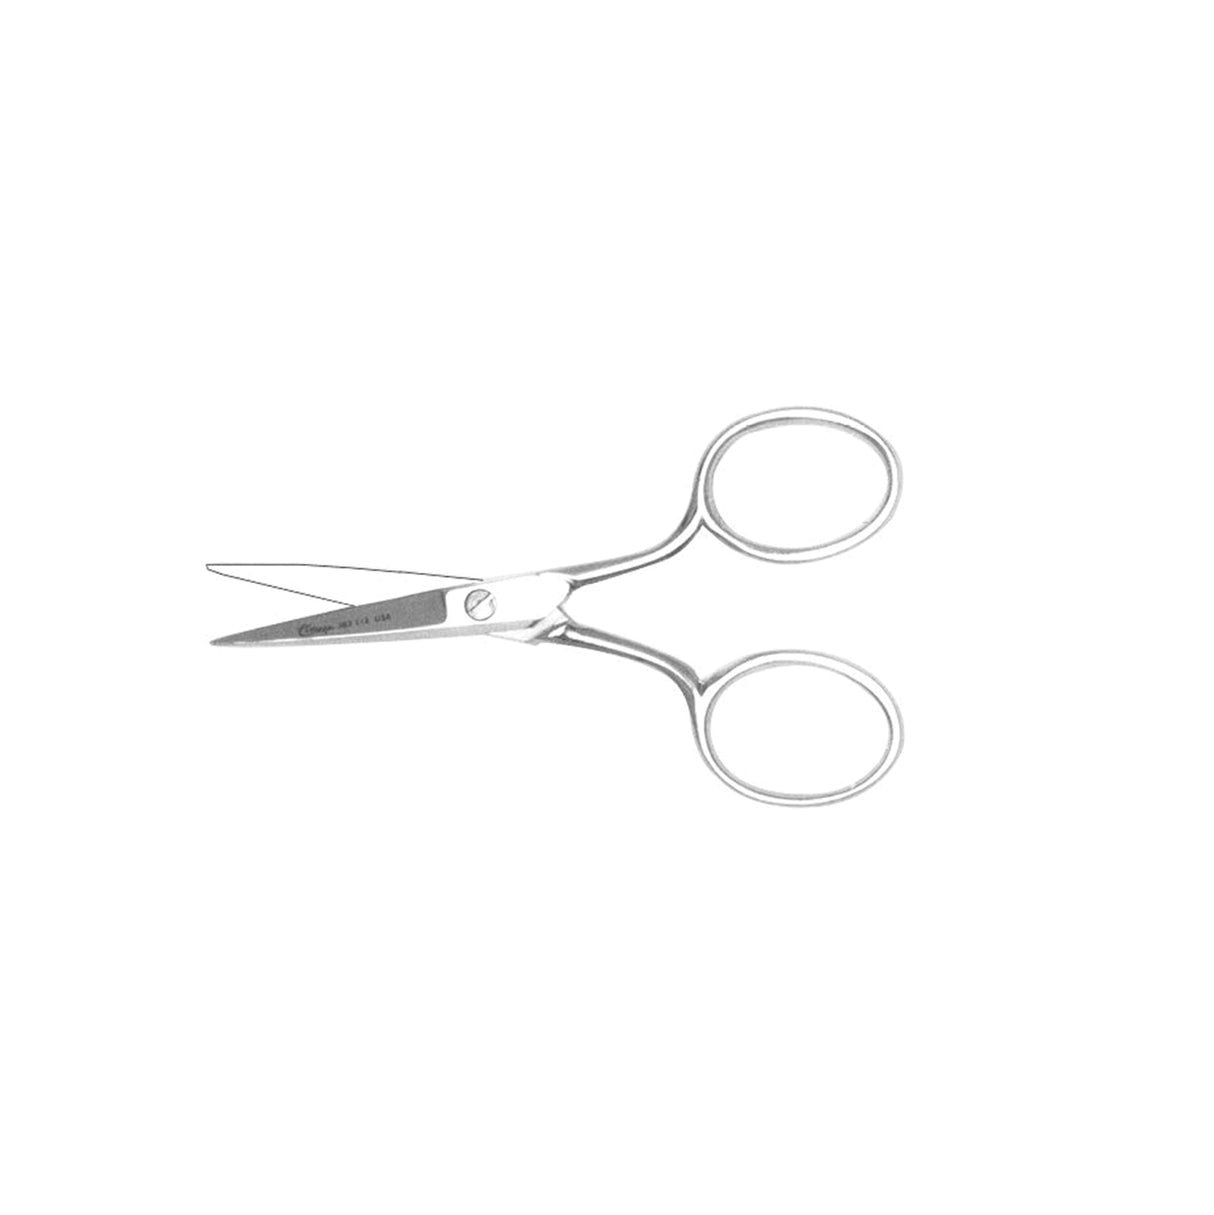 3 1/2 Nickel, Clauss Thread Scissors, Stainless Steel, #T-1044